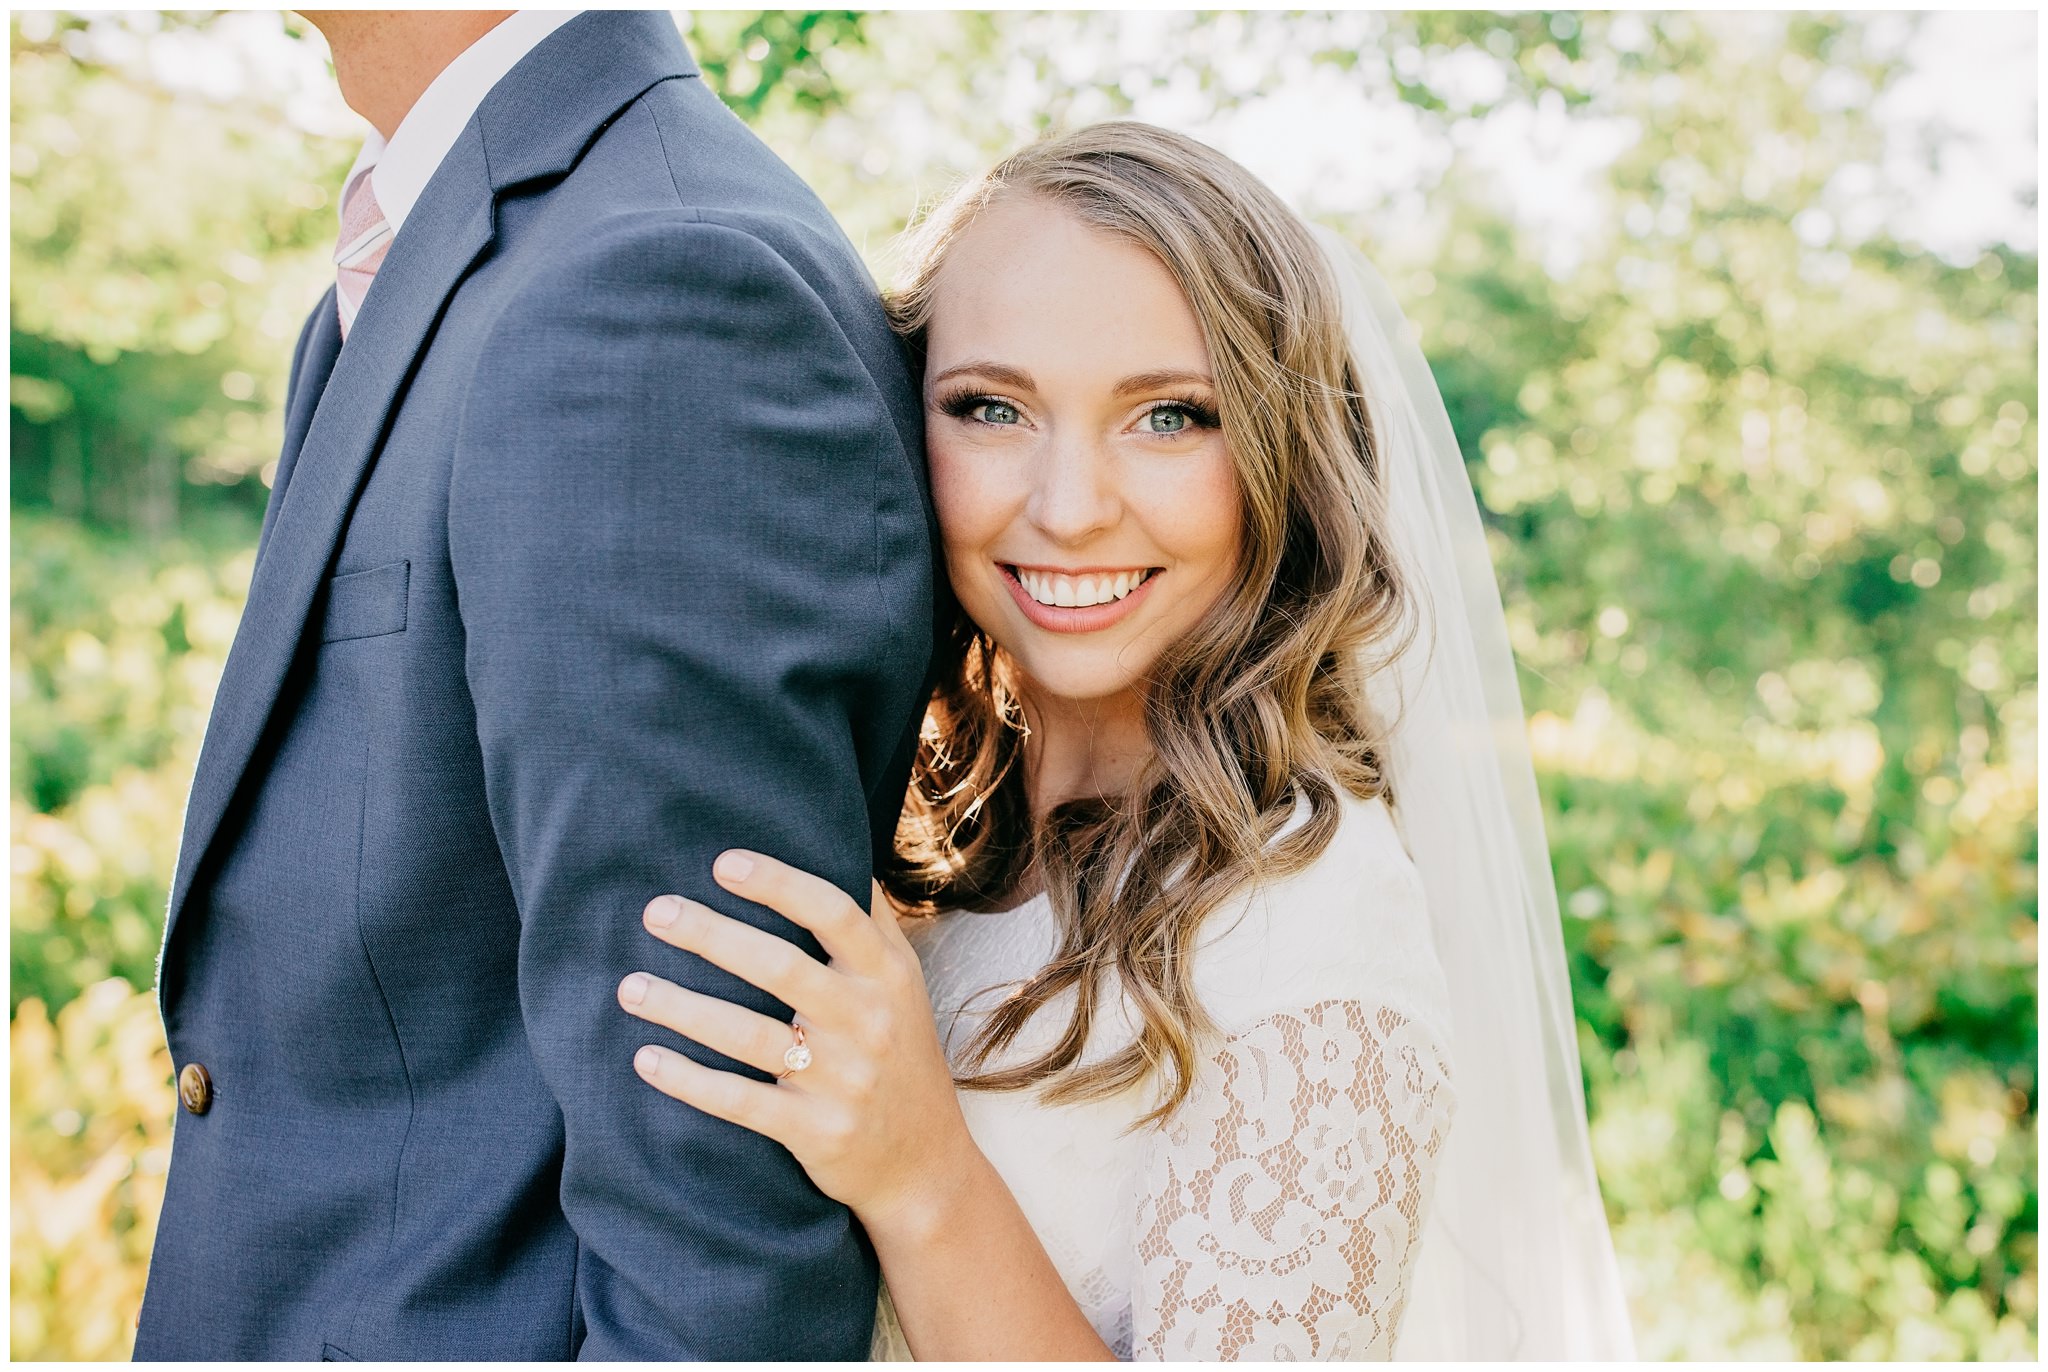 Aspen tree bridals and wedding photos